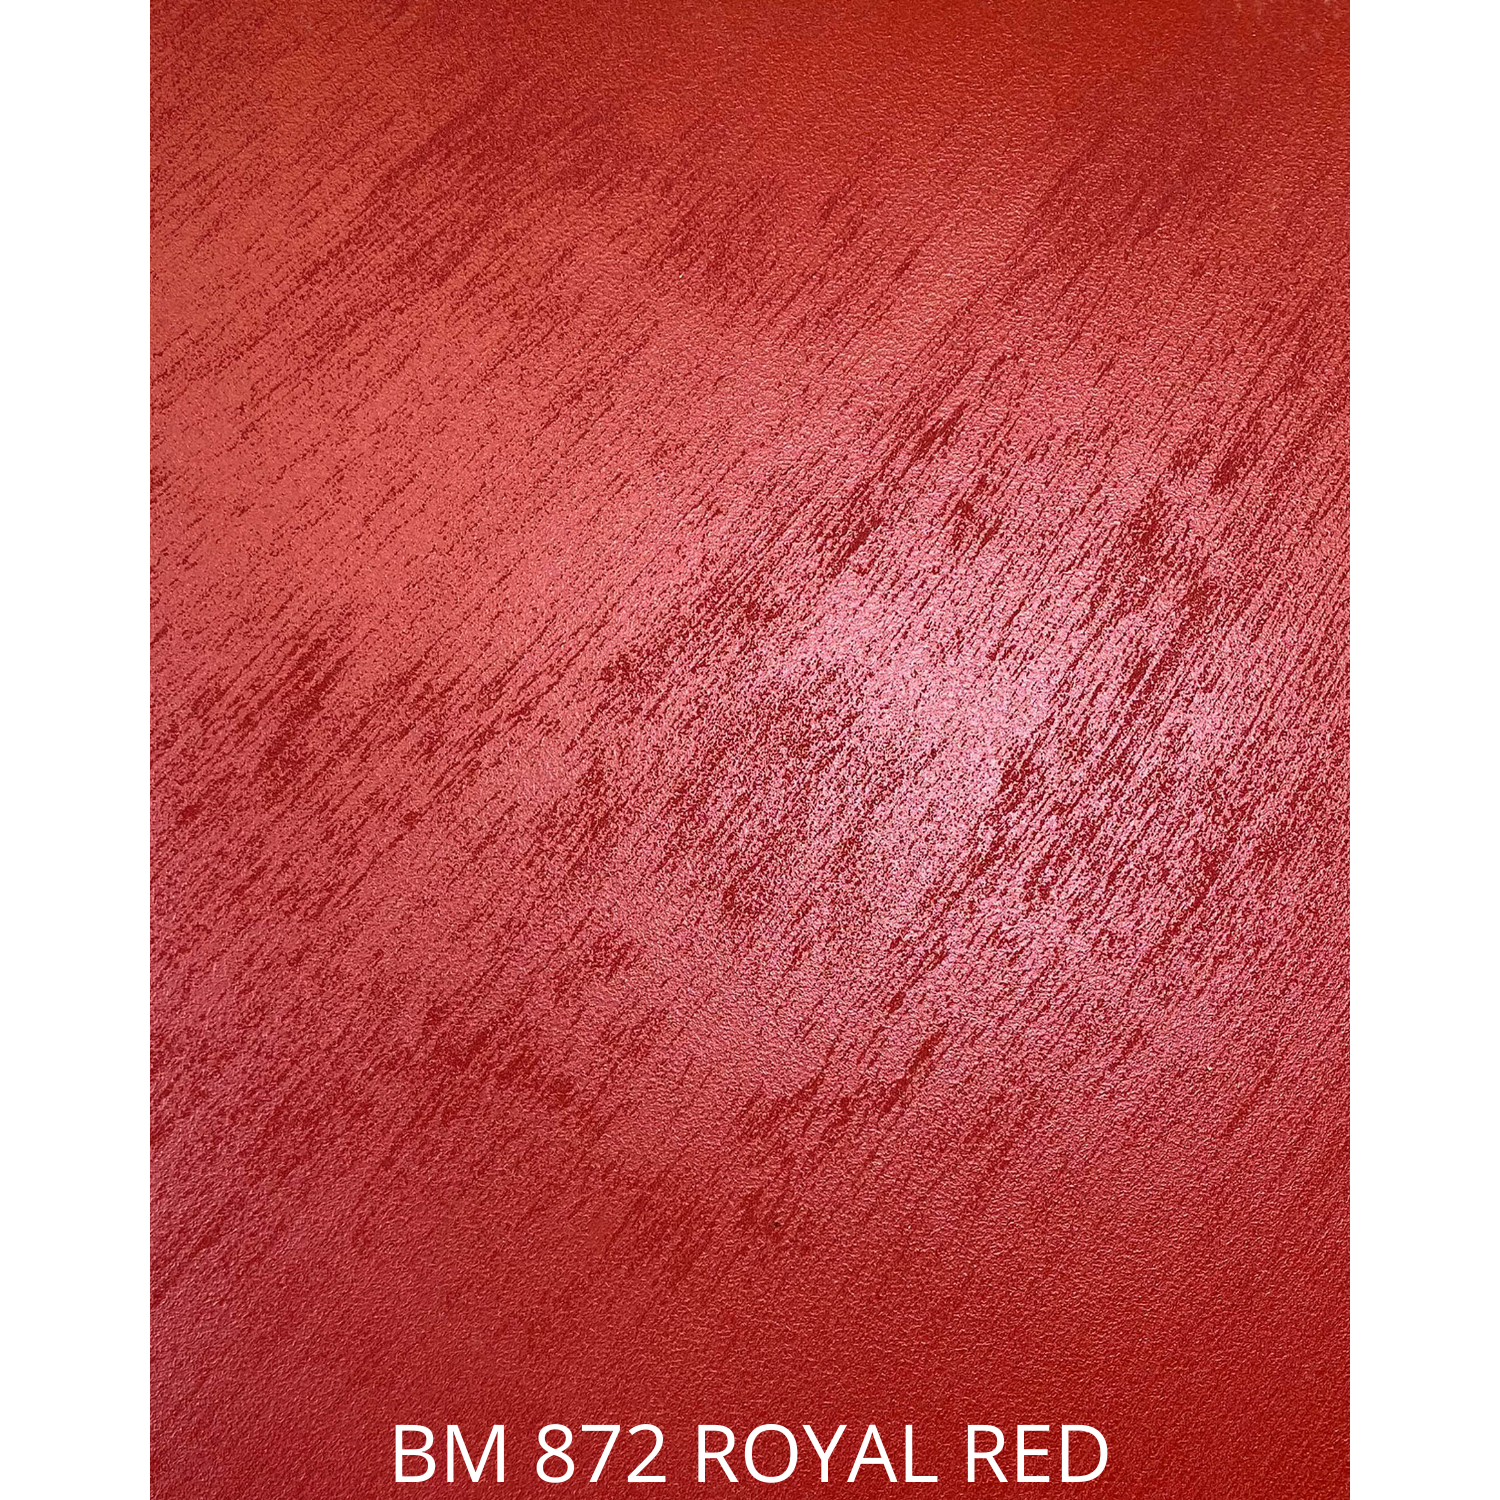 BM 872 ROYAL RED